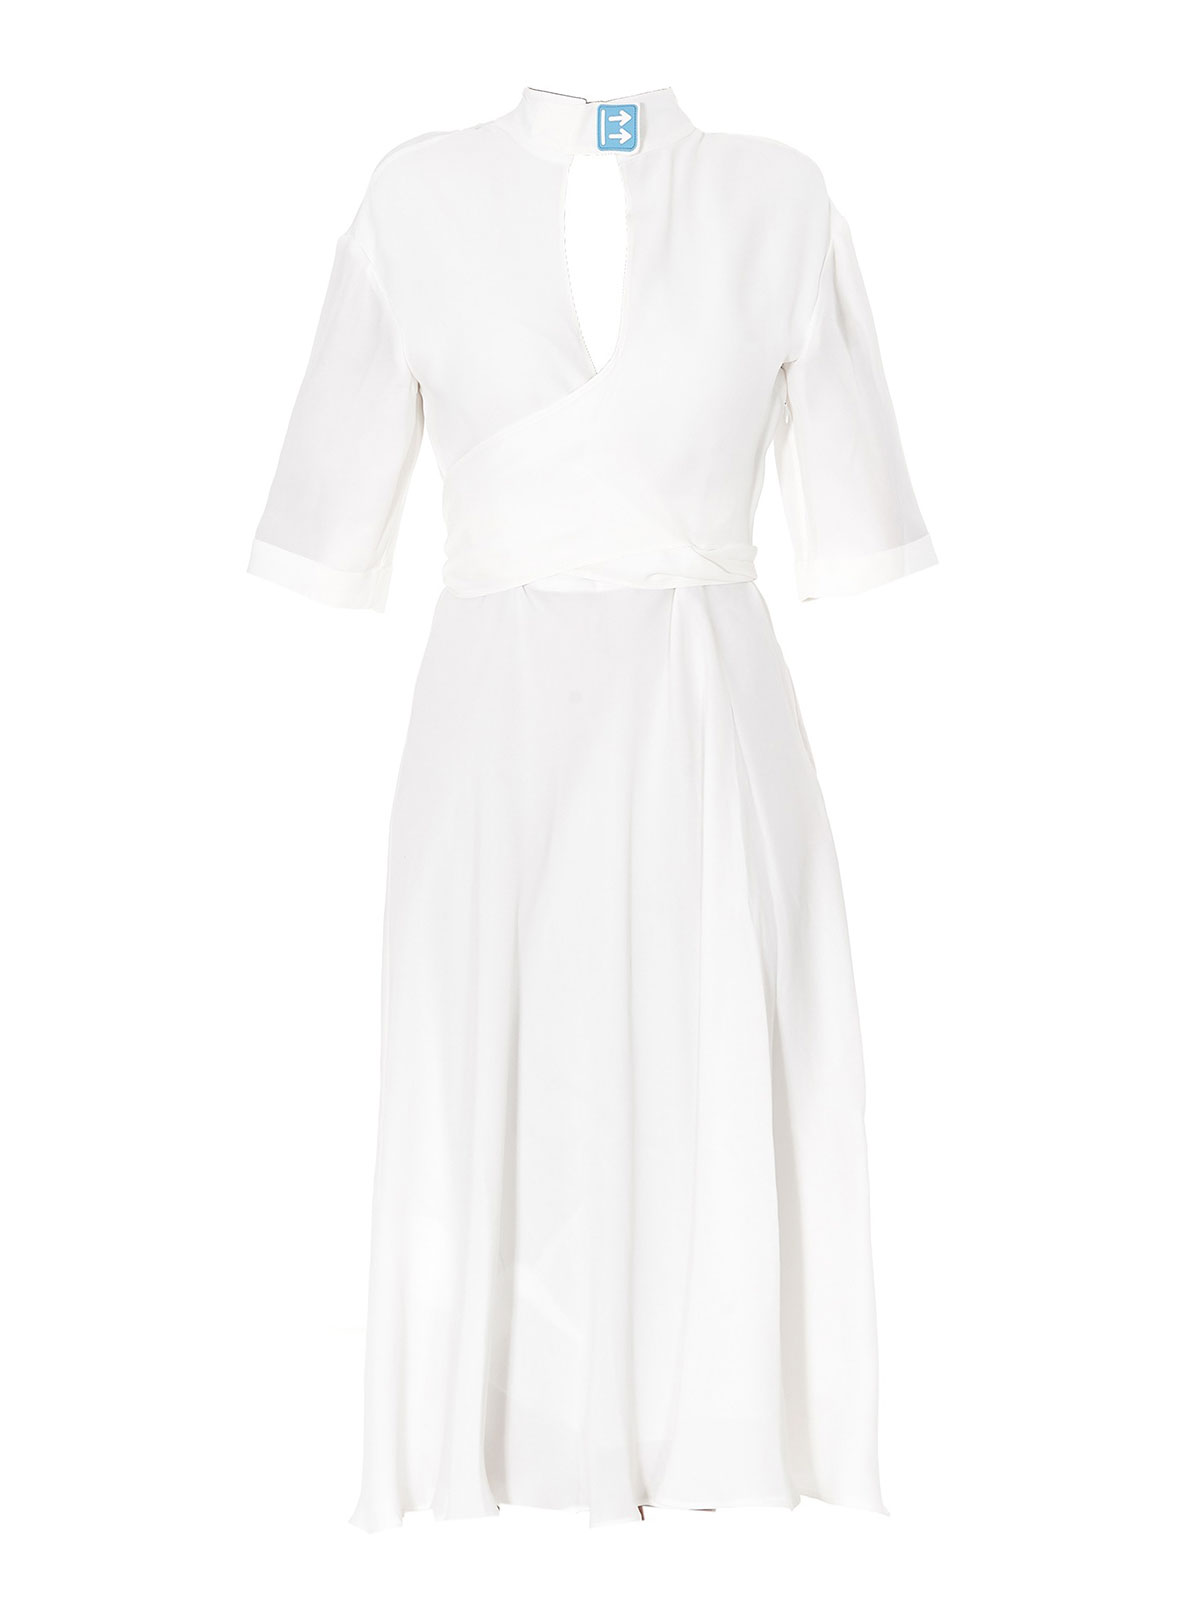 OFF-WHITE ARROWS DETAIL TURTLENECK DRESS